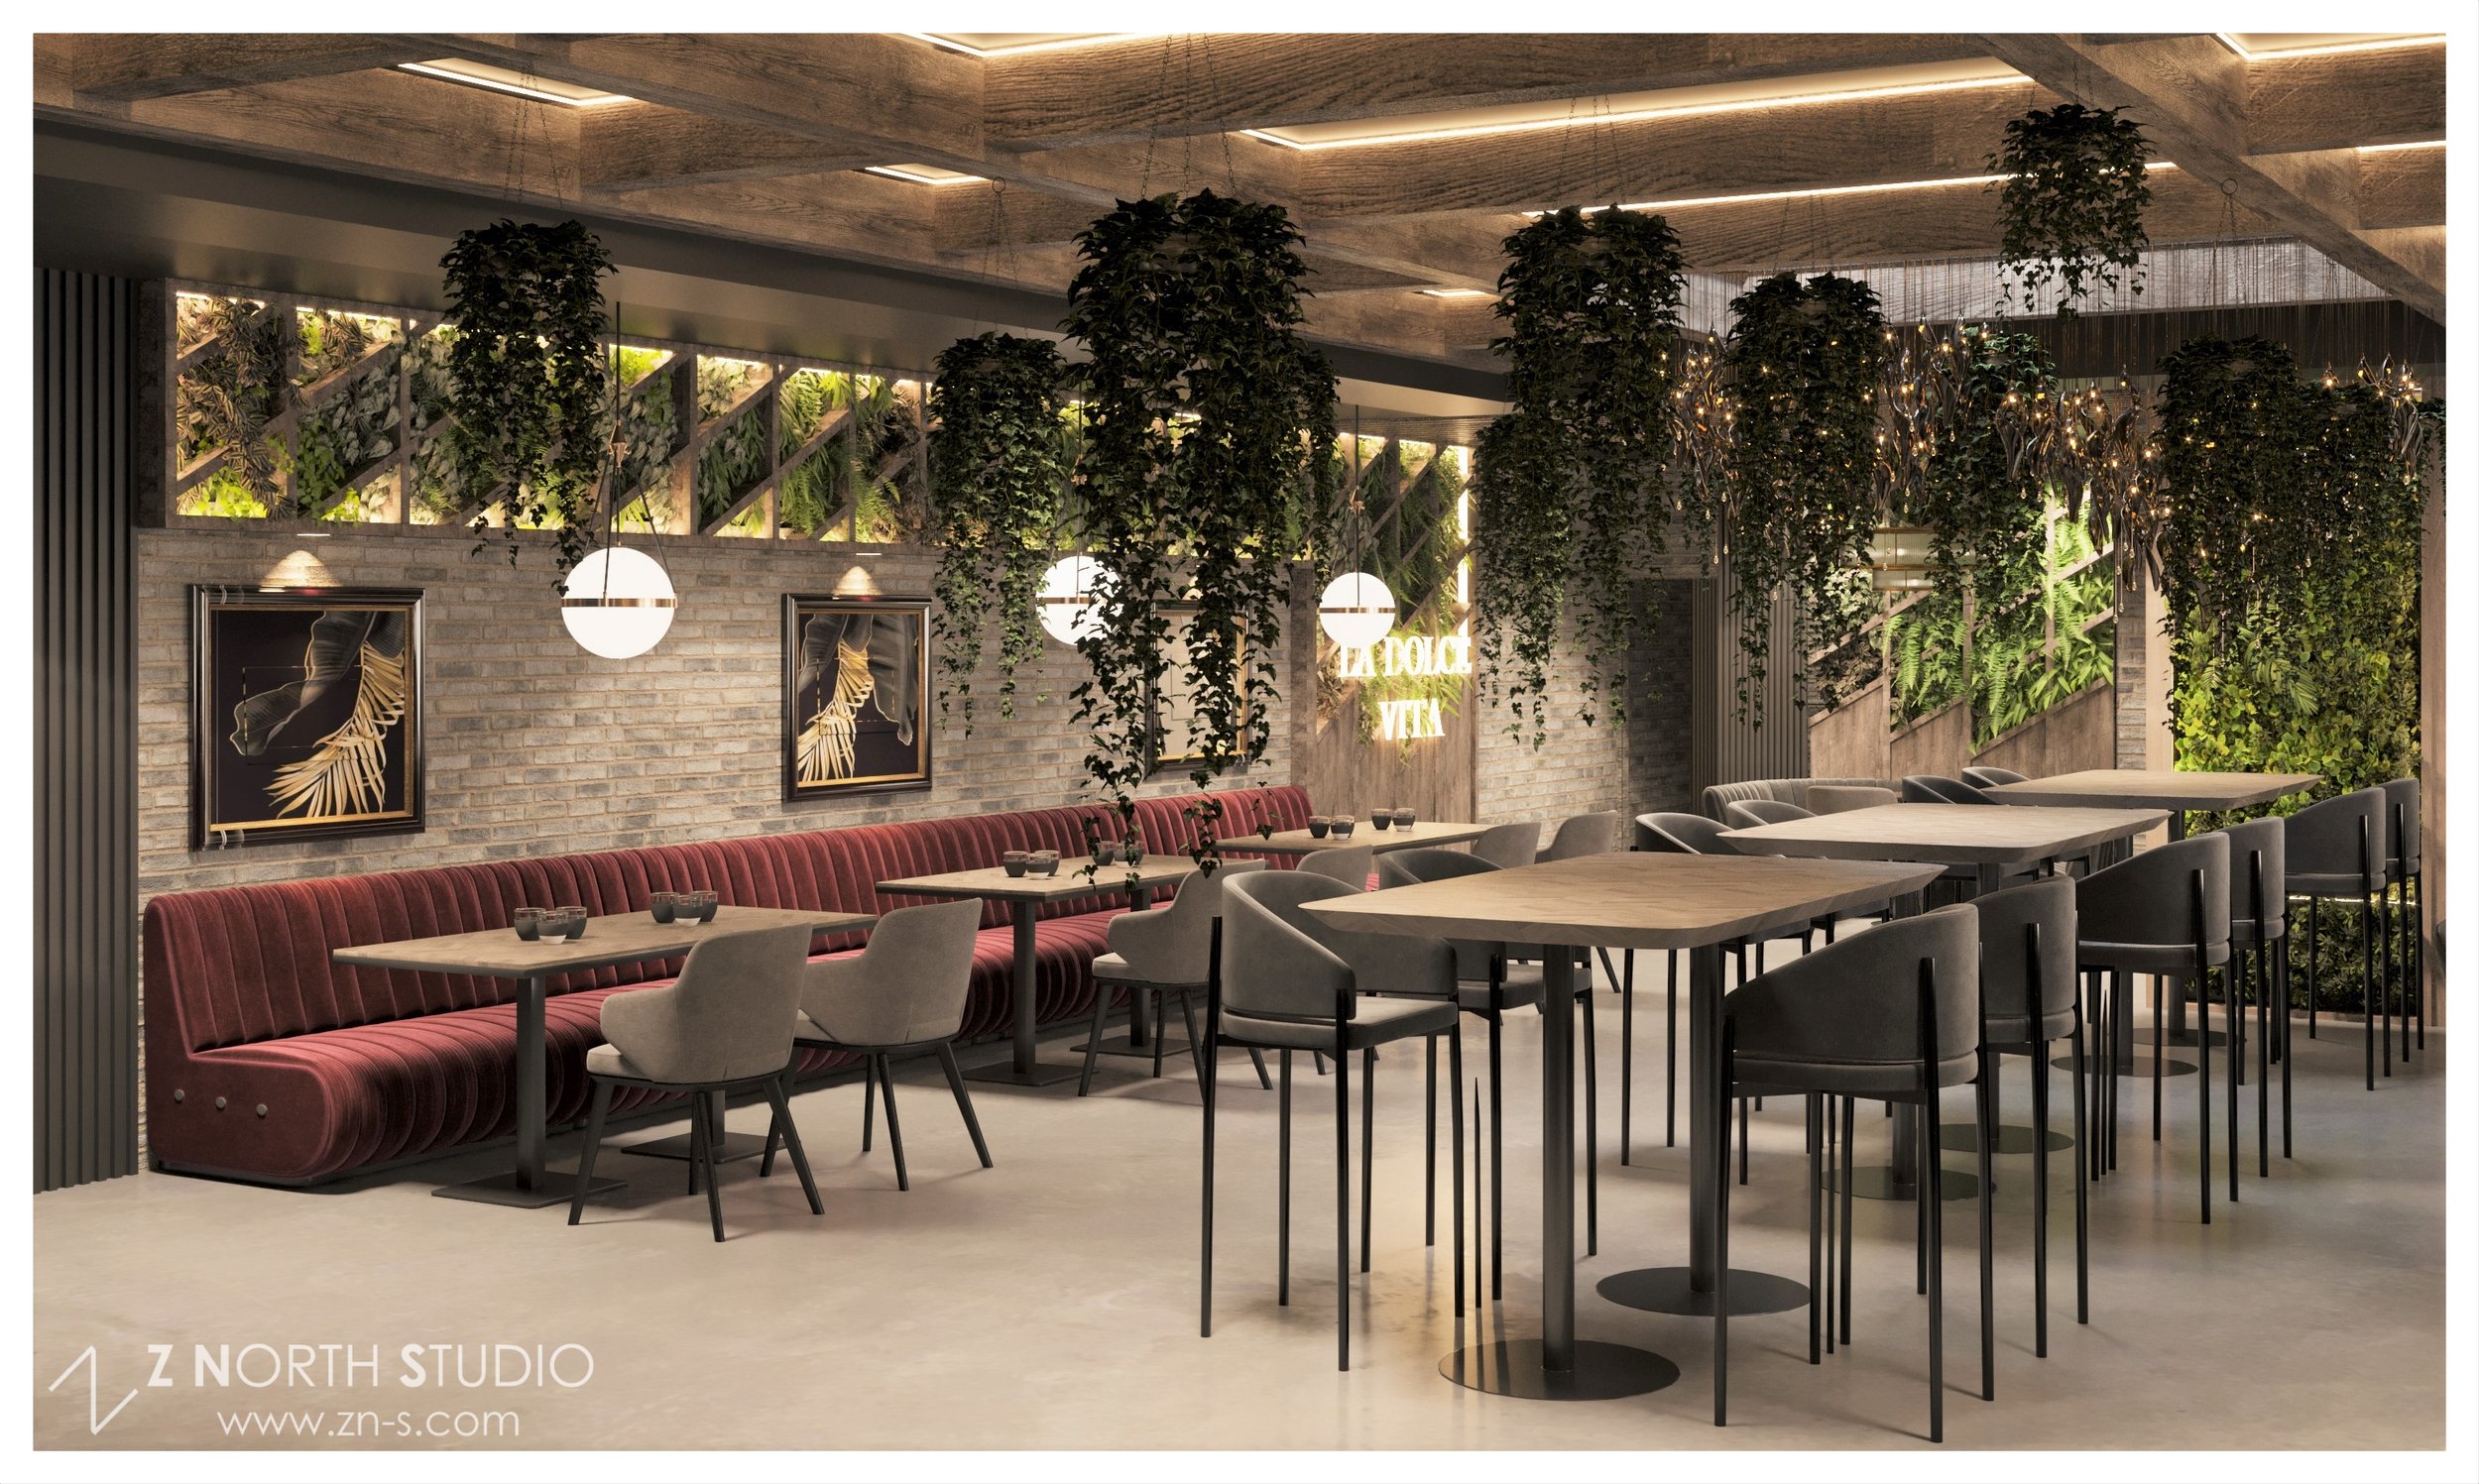 Flavio Restaurant Design - Z North Studio - Bar Area Area Design zn-s com (3).jpg